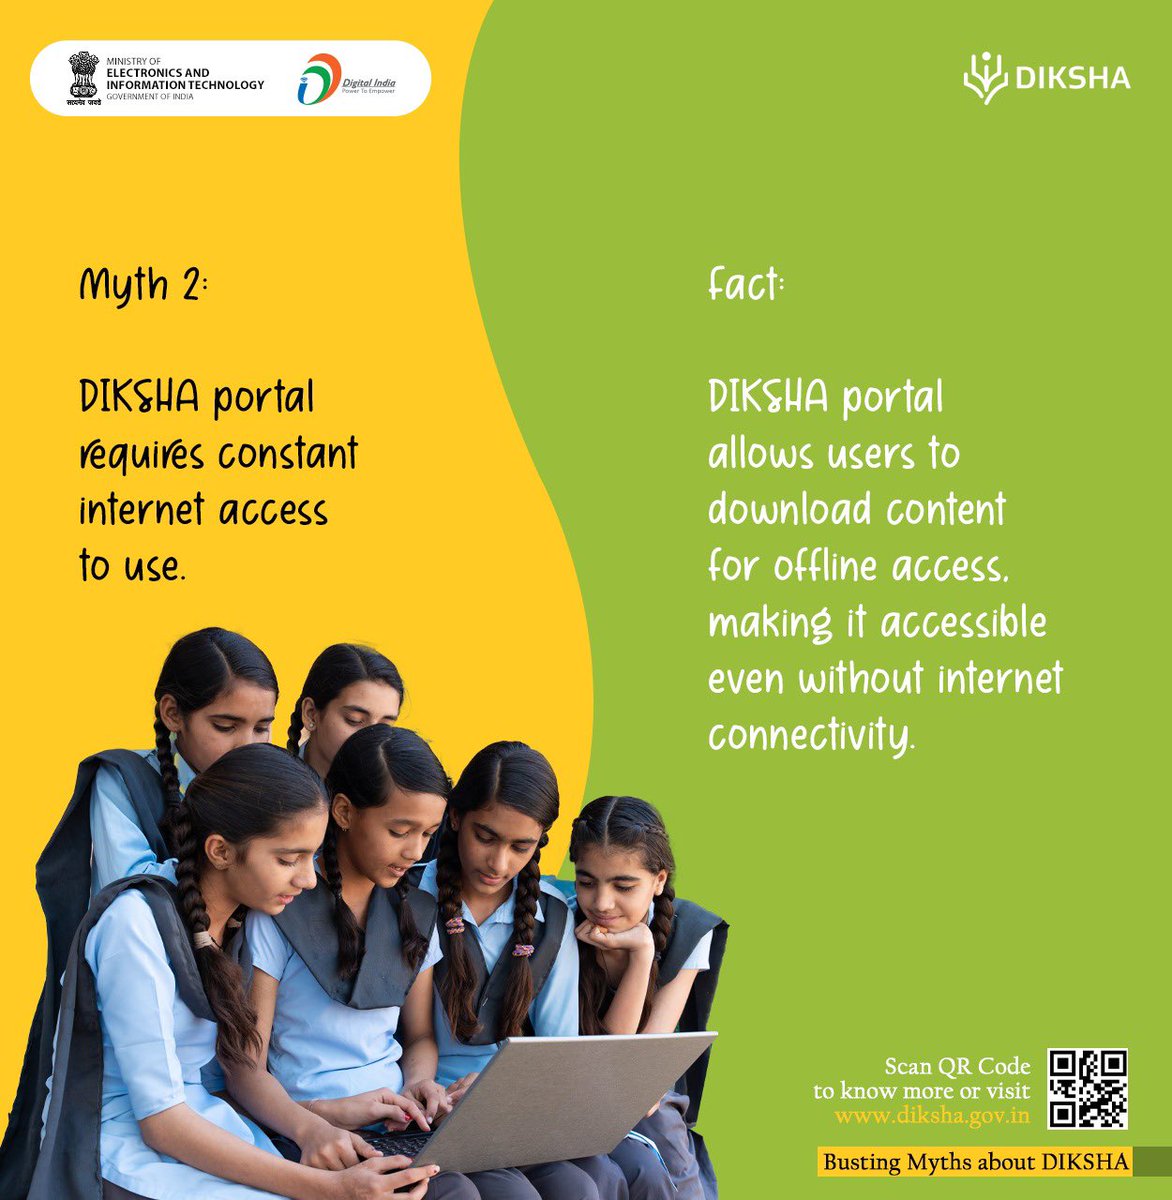 Use the content on the DIKSHA portal even when offline! Visit diksha.gov.in #DigitalIndia #eLearning @EduMinOfIndia @DselEduMinistry